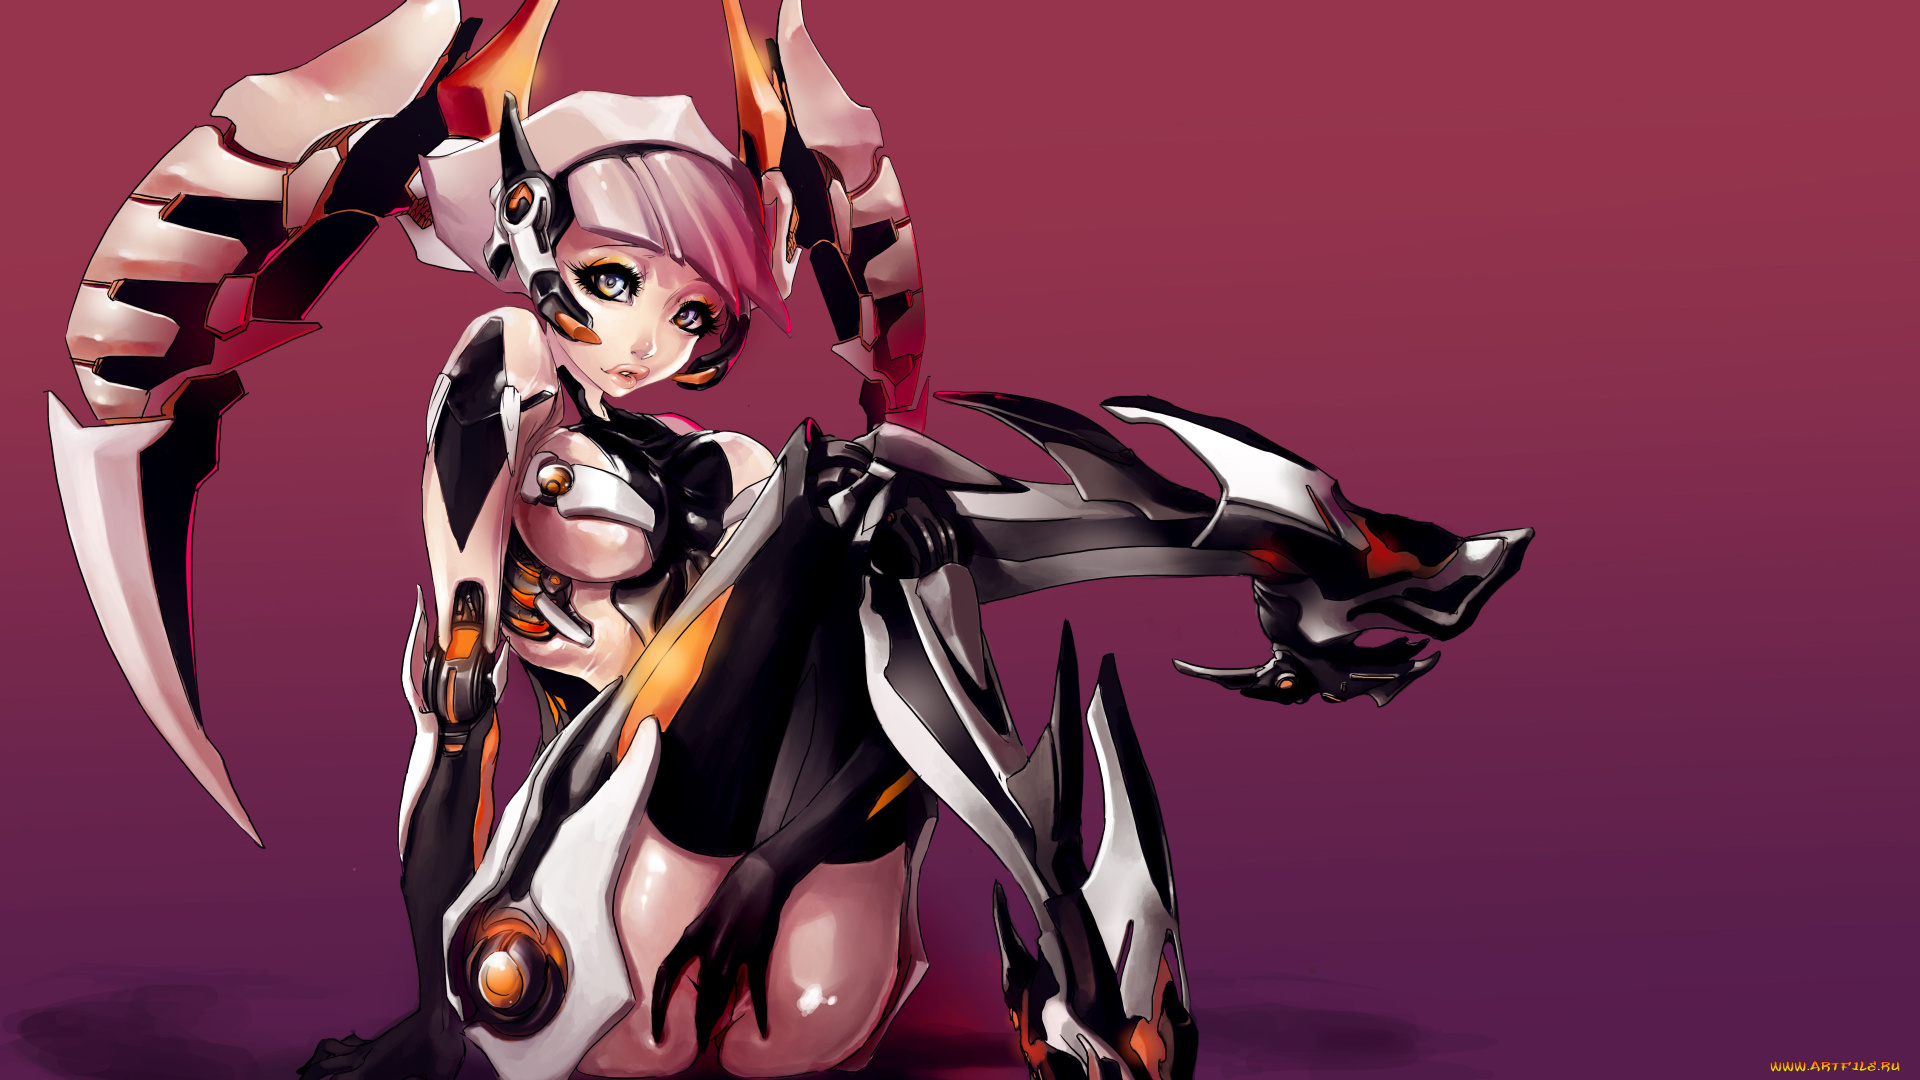 №677120, аниме, weapon, blood, technology, robo-girl